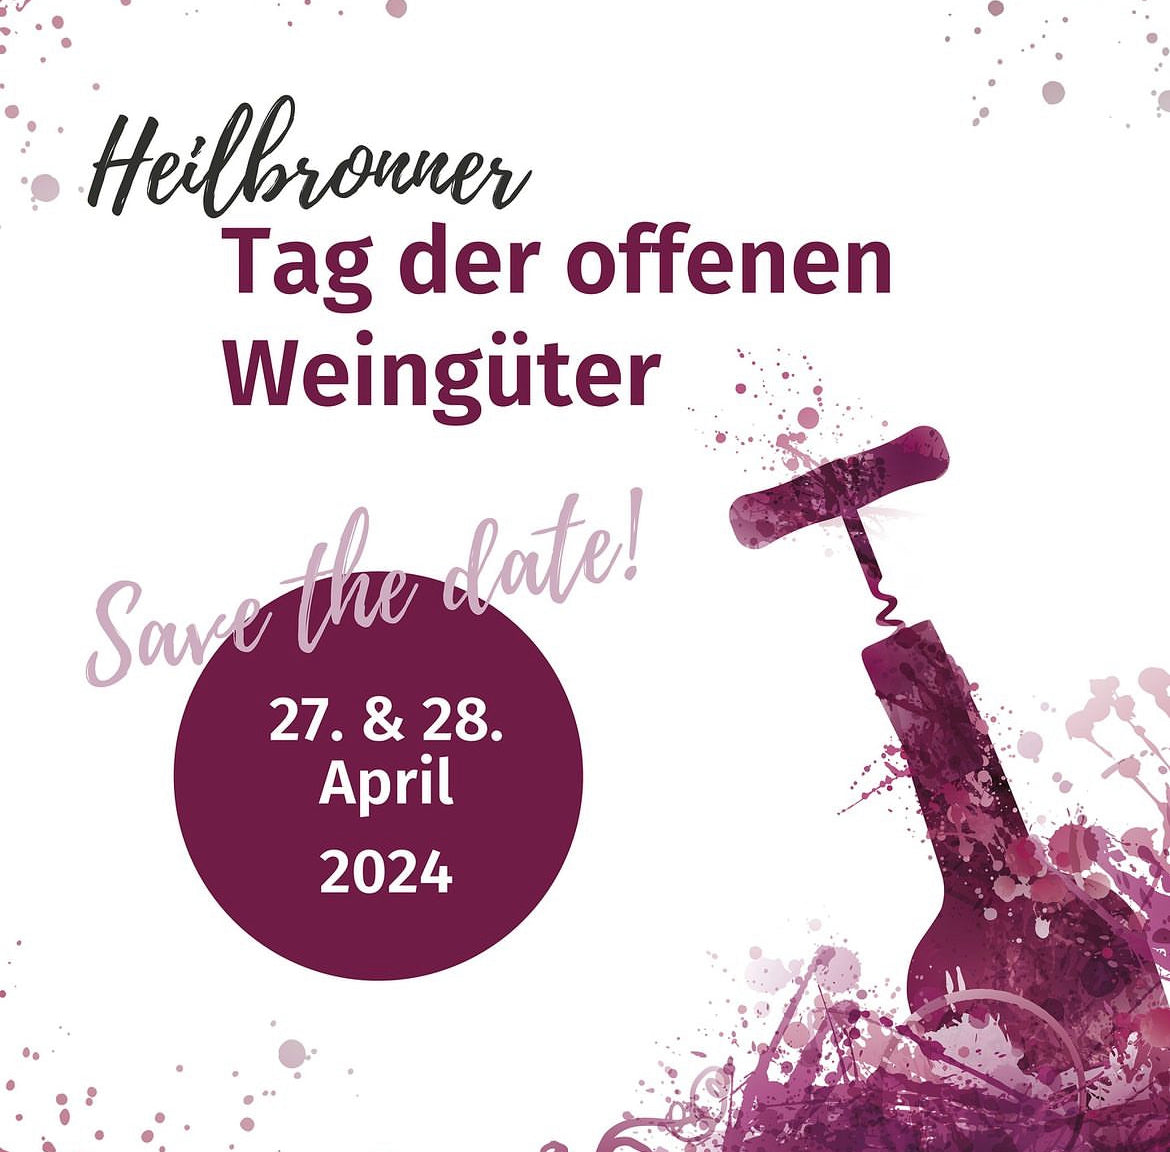 Tag der offenen Weingüter Heilbronn